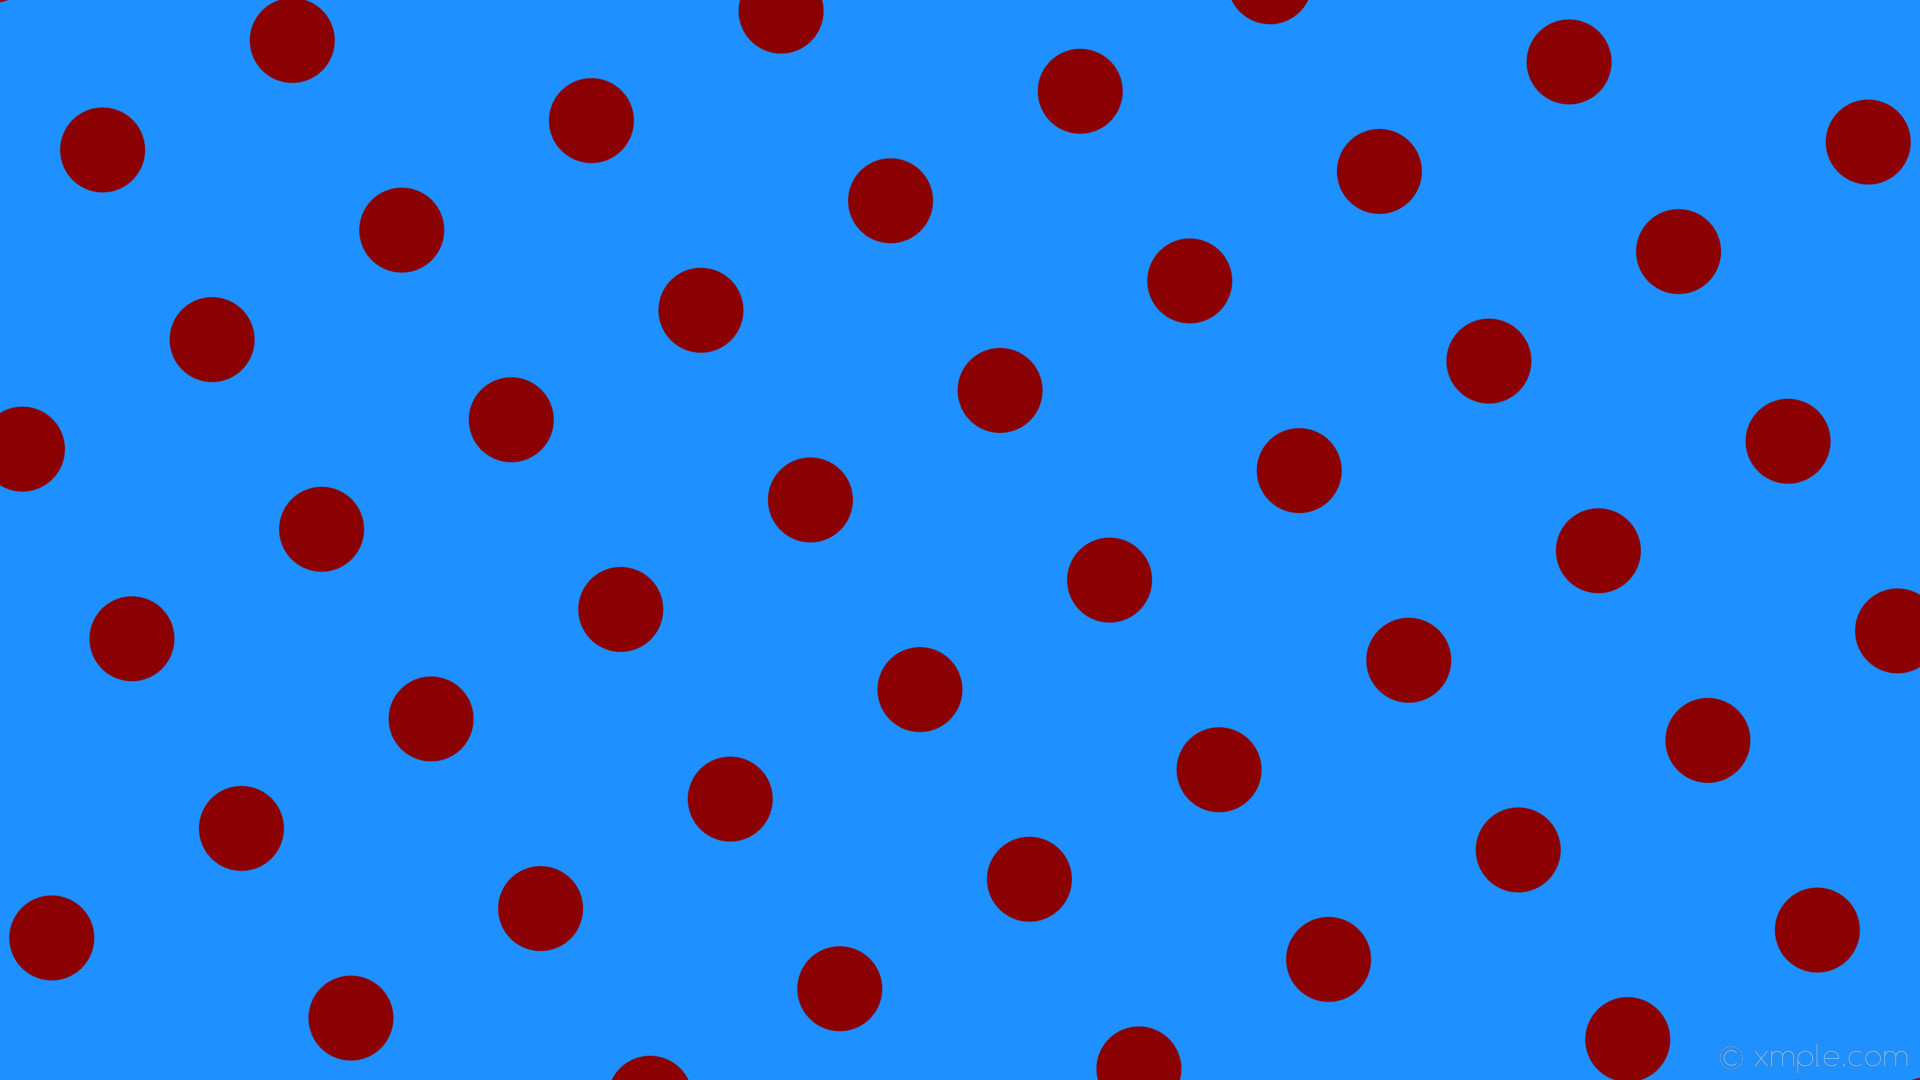 wallpaper blue dots spots red polka dodger blue dark red #1e90ff #8b0000  210Â°